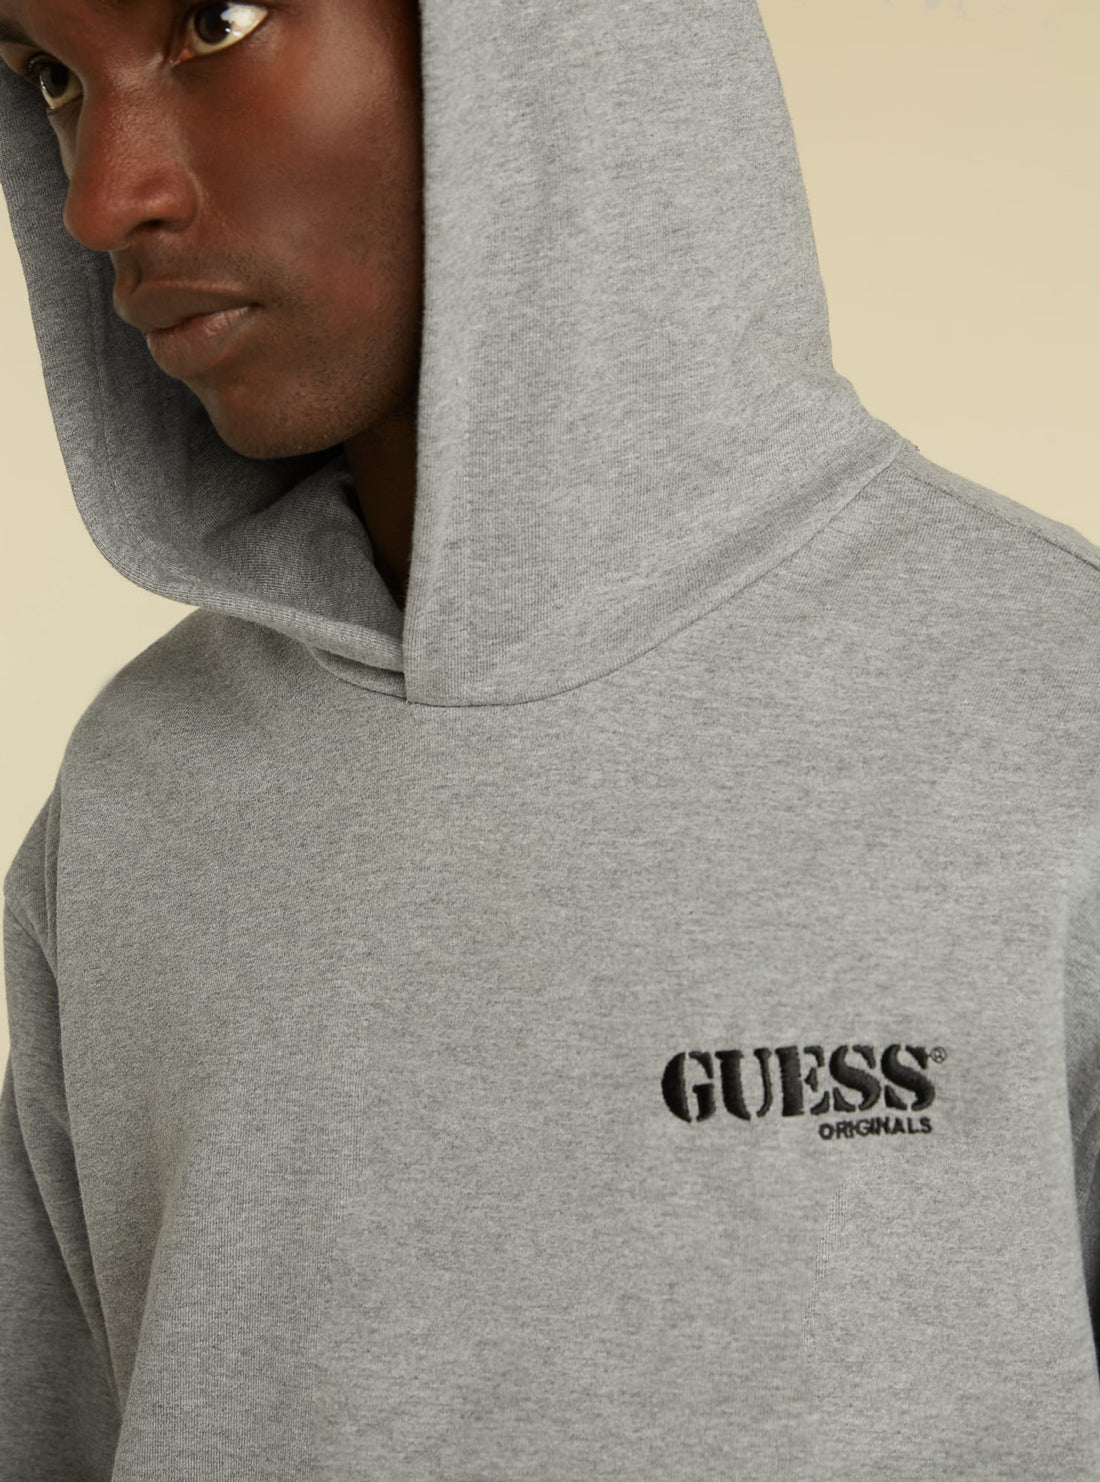 GUESS Mens GUESS Originals Grey Kit Hoodie MBYQ00RA1B3 Detail View